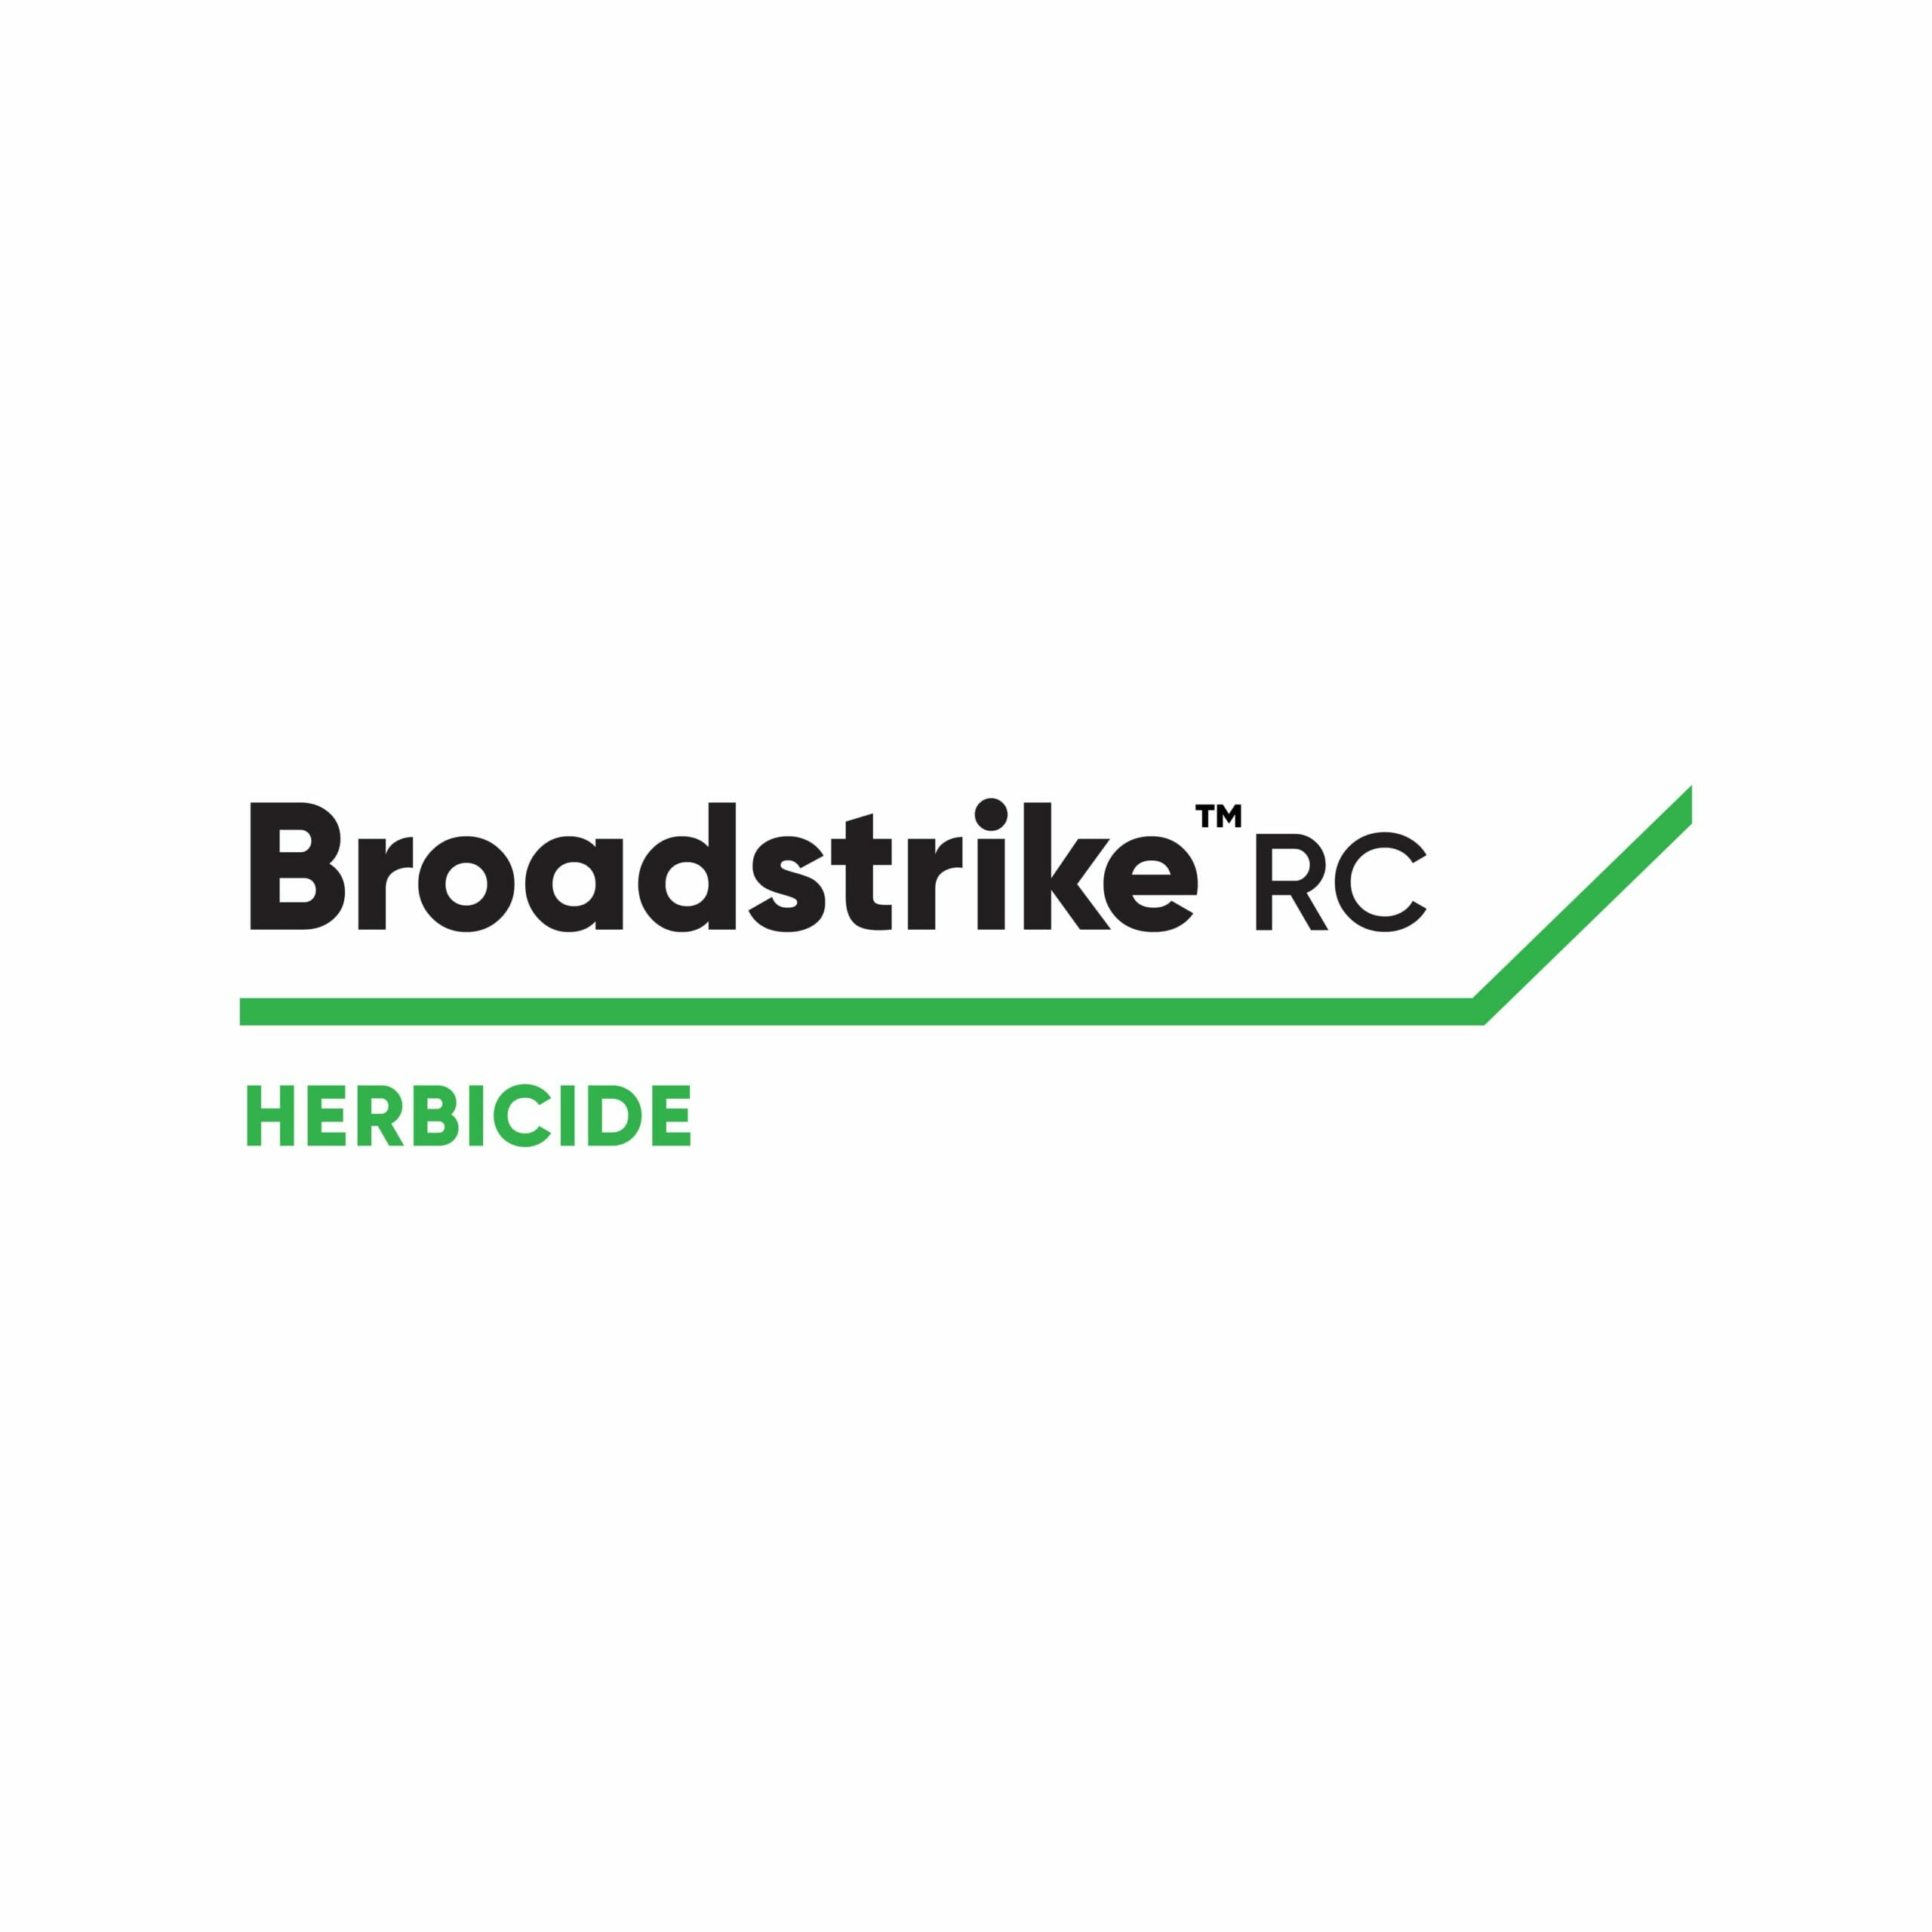 Broadstrike RC